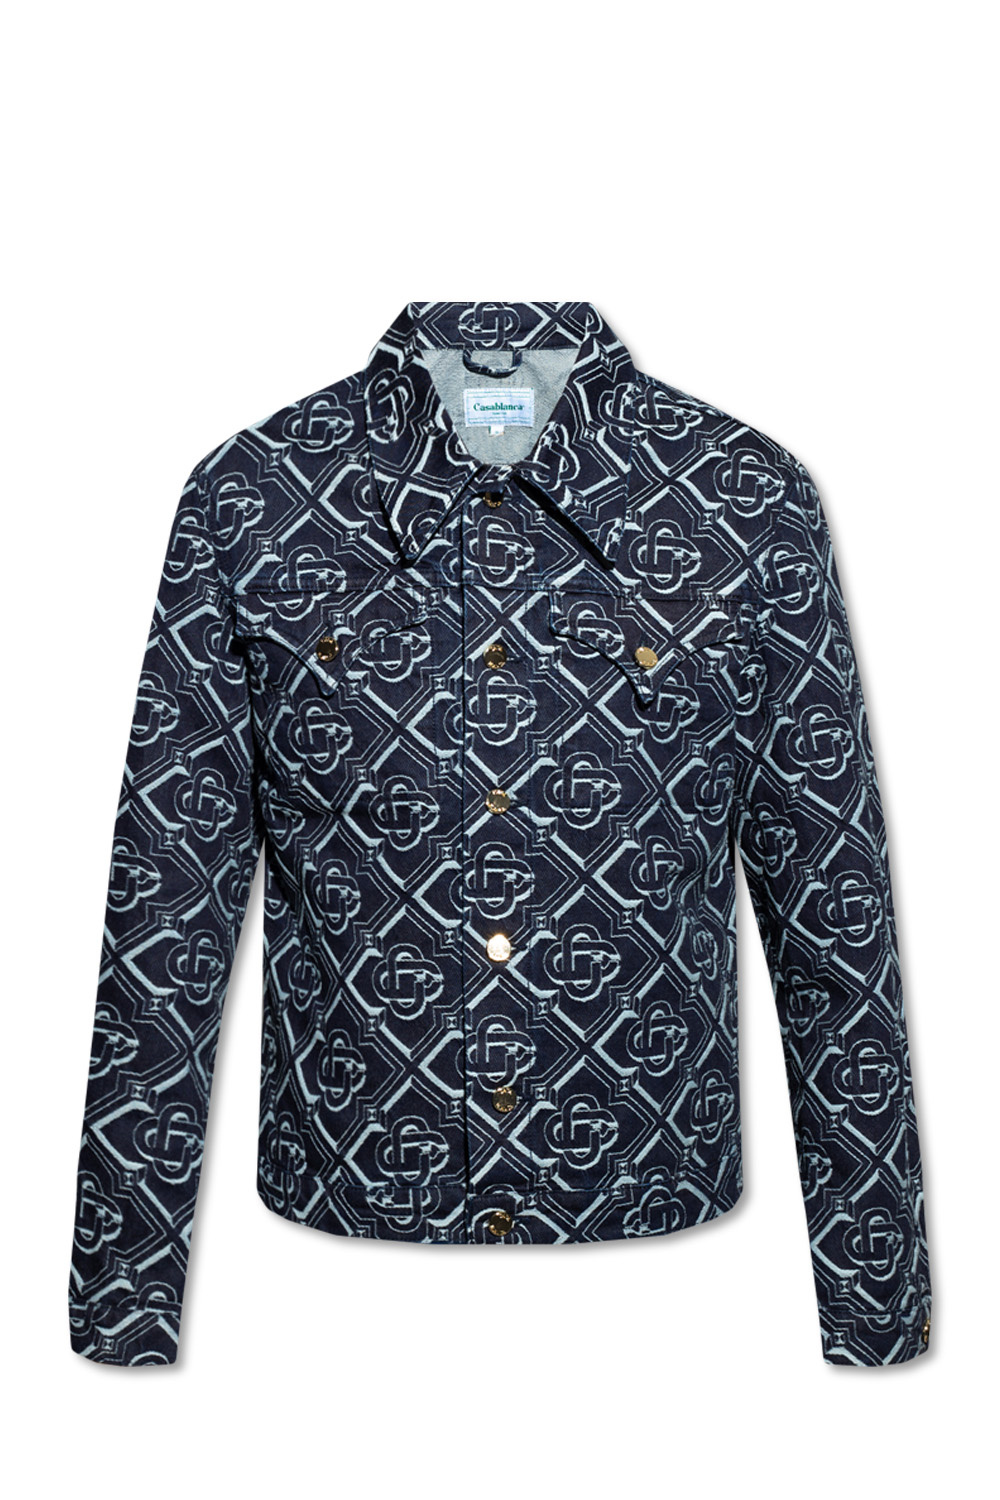 Louis Vuitton - Monogram Padded Denim Jacket - Indigo - Men - Size: 54 - Luxury